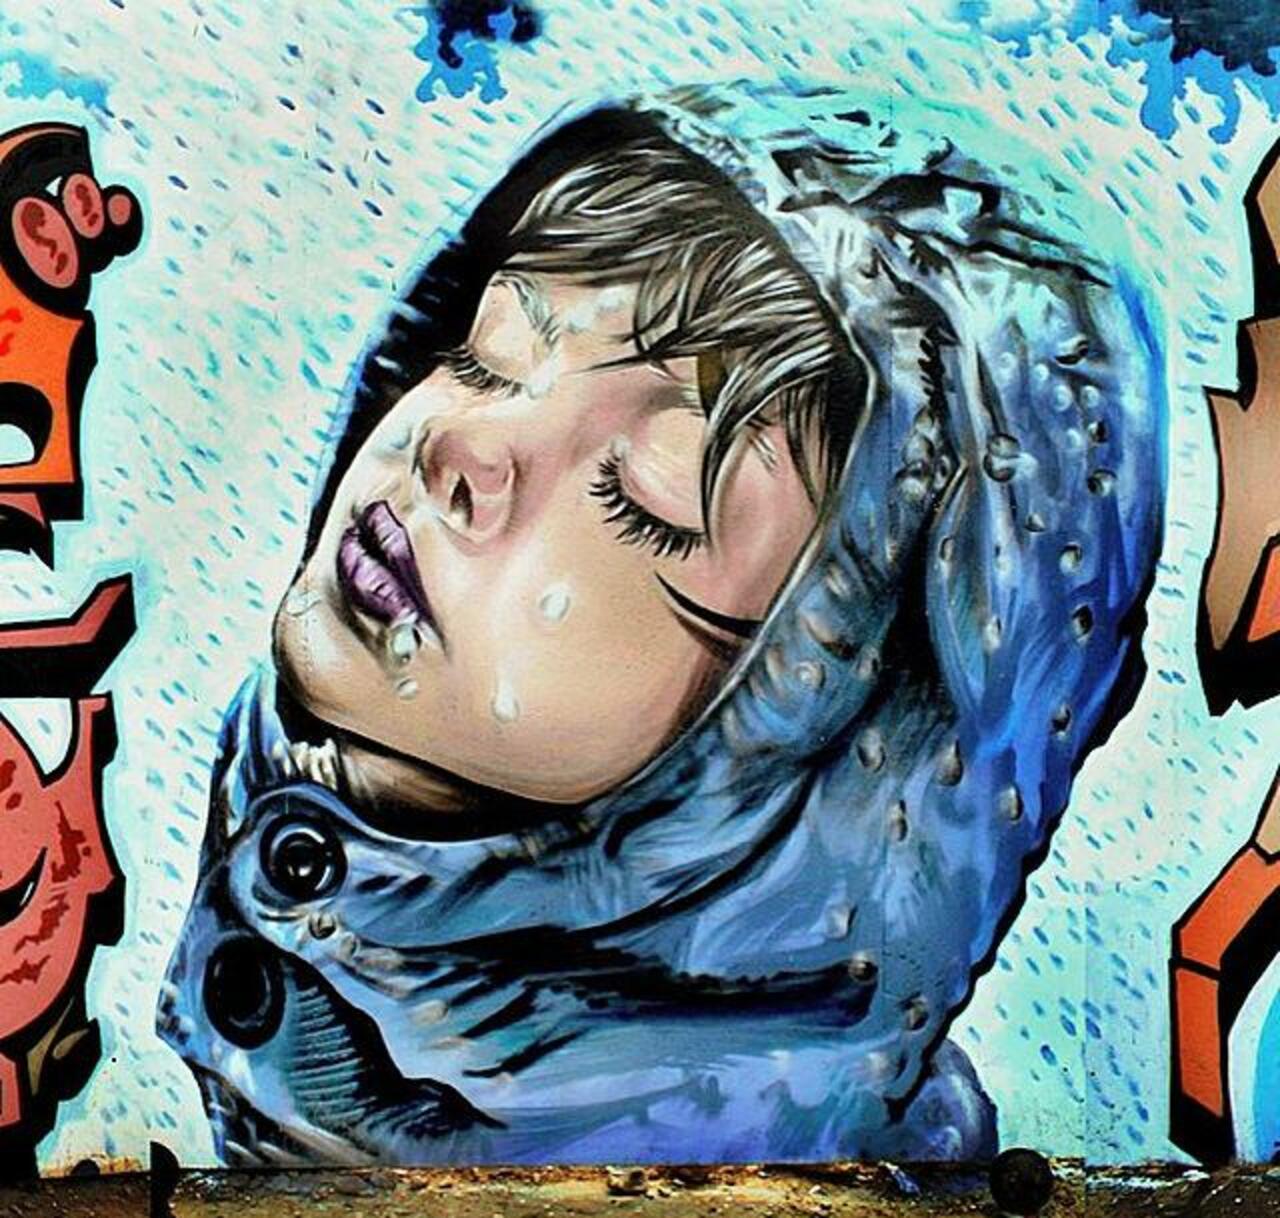 Street Art by the artist' Spooksoistreet' titled 'Raindrops' 

#art #arte #graffiti #streetart http://t.co/bqZ0wvxfsK